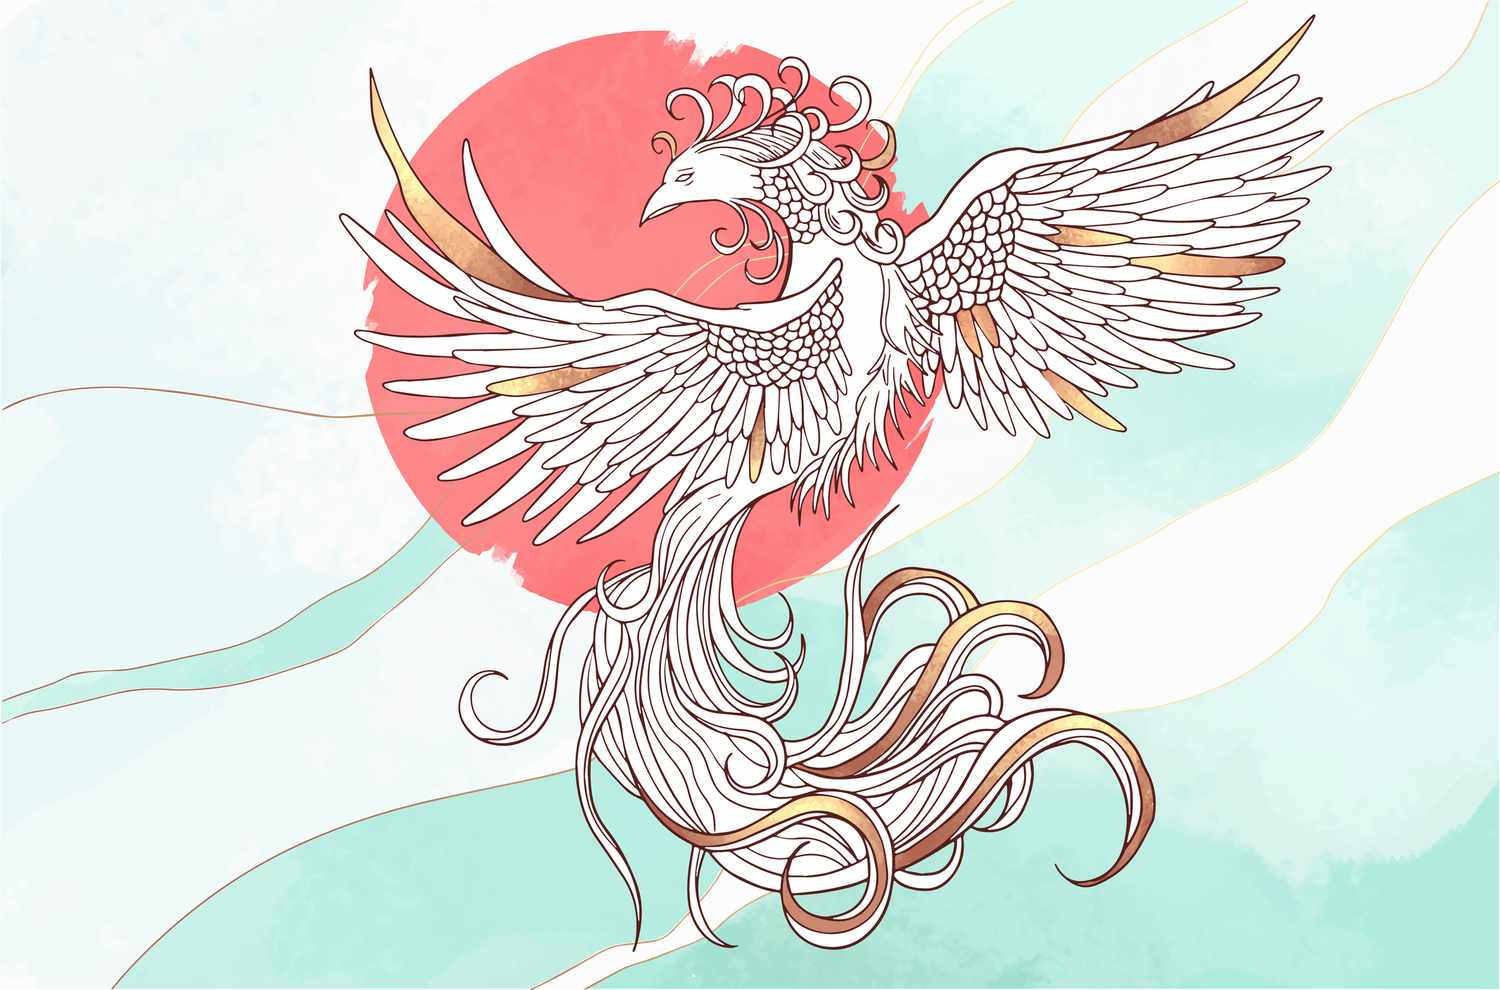 abstrakte Illustration des mythologischen Vogels Phönix Fenghuang auf hellem Hintergrund